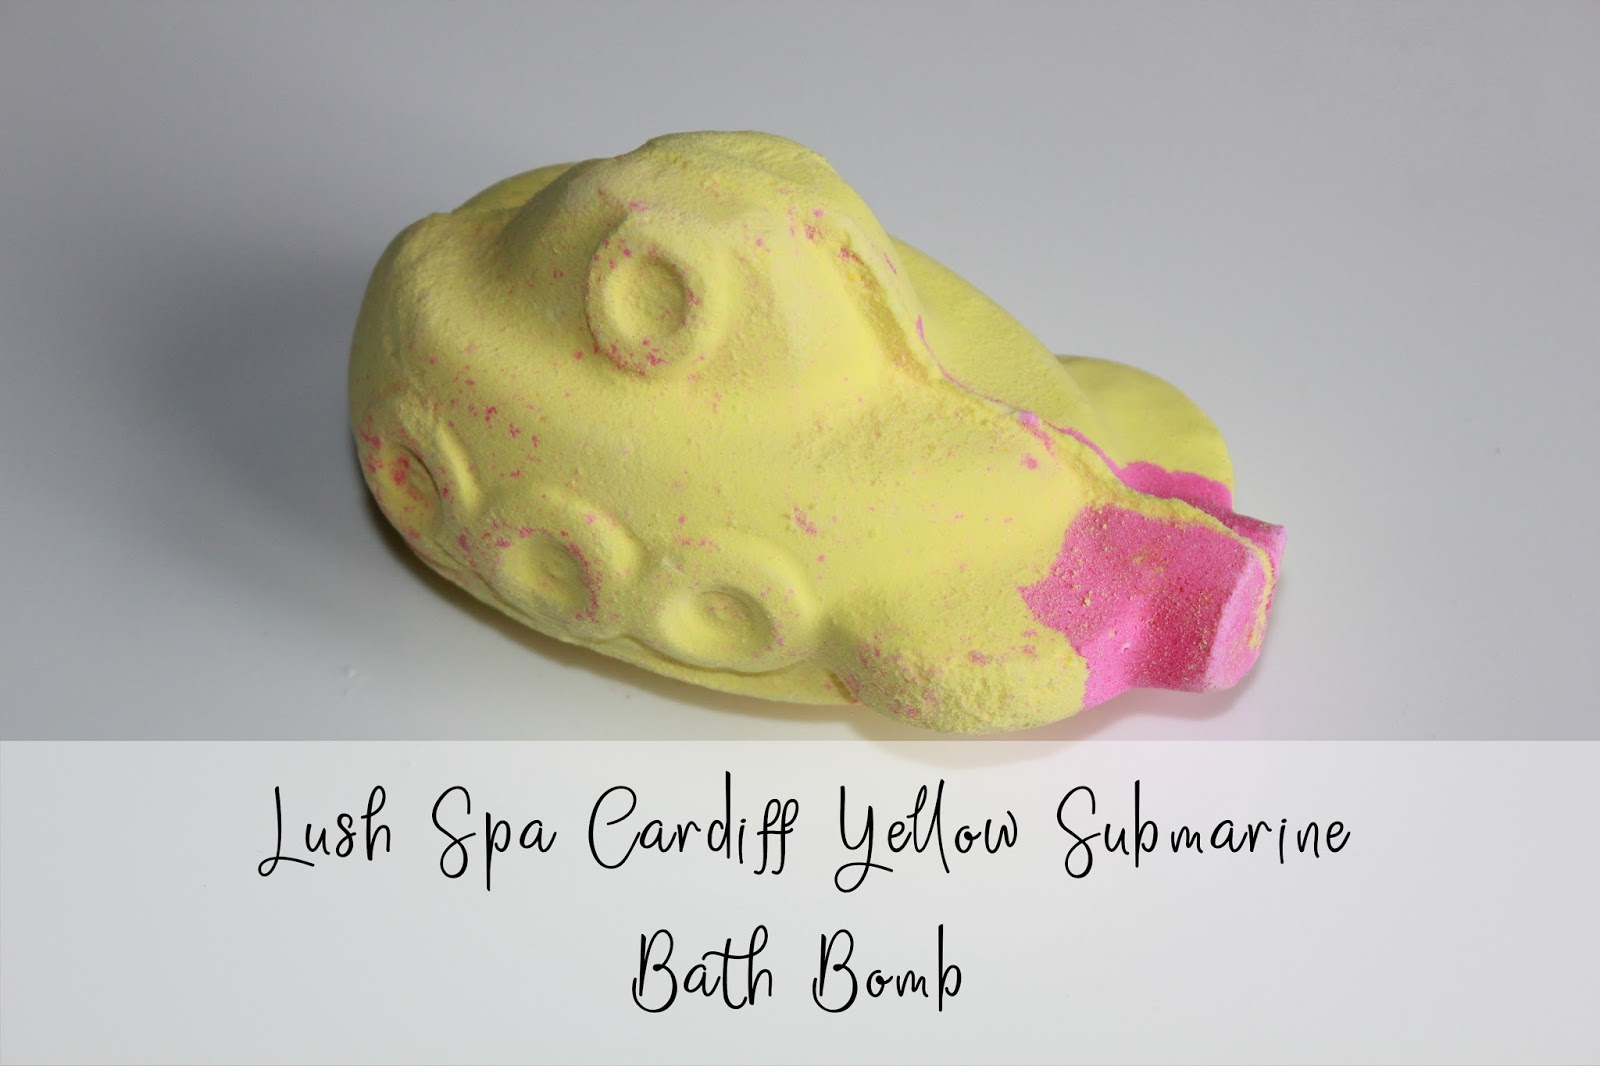 Lush Spa Cardiff Yellow Submarine Bath Bomb